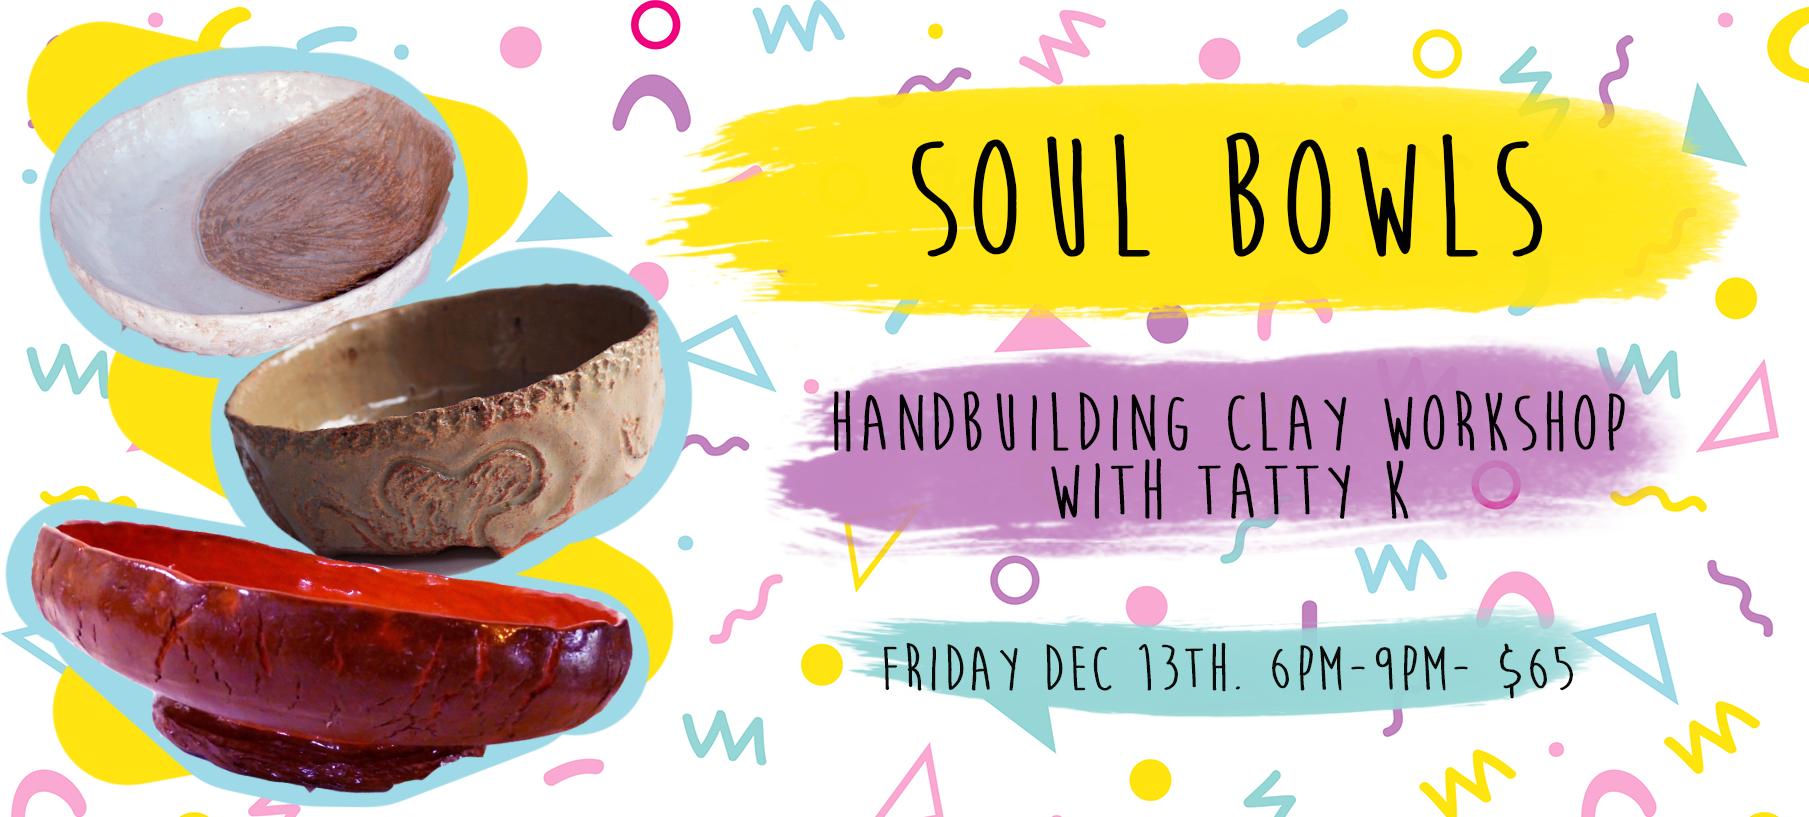 Soul Bowls- Hand-building clay workshop